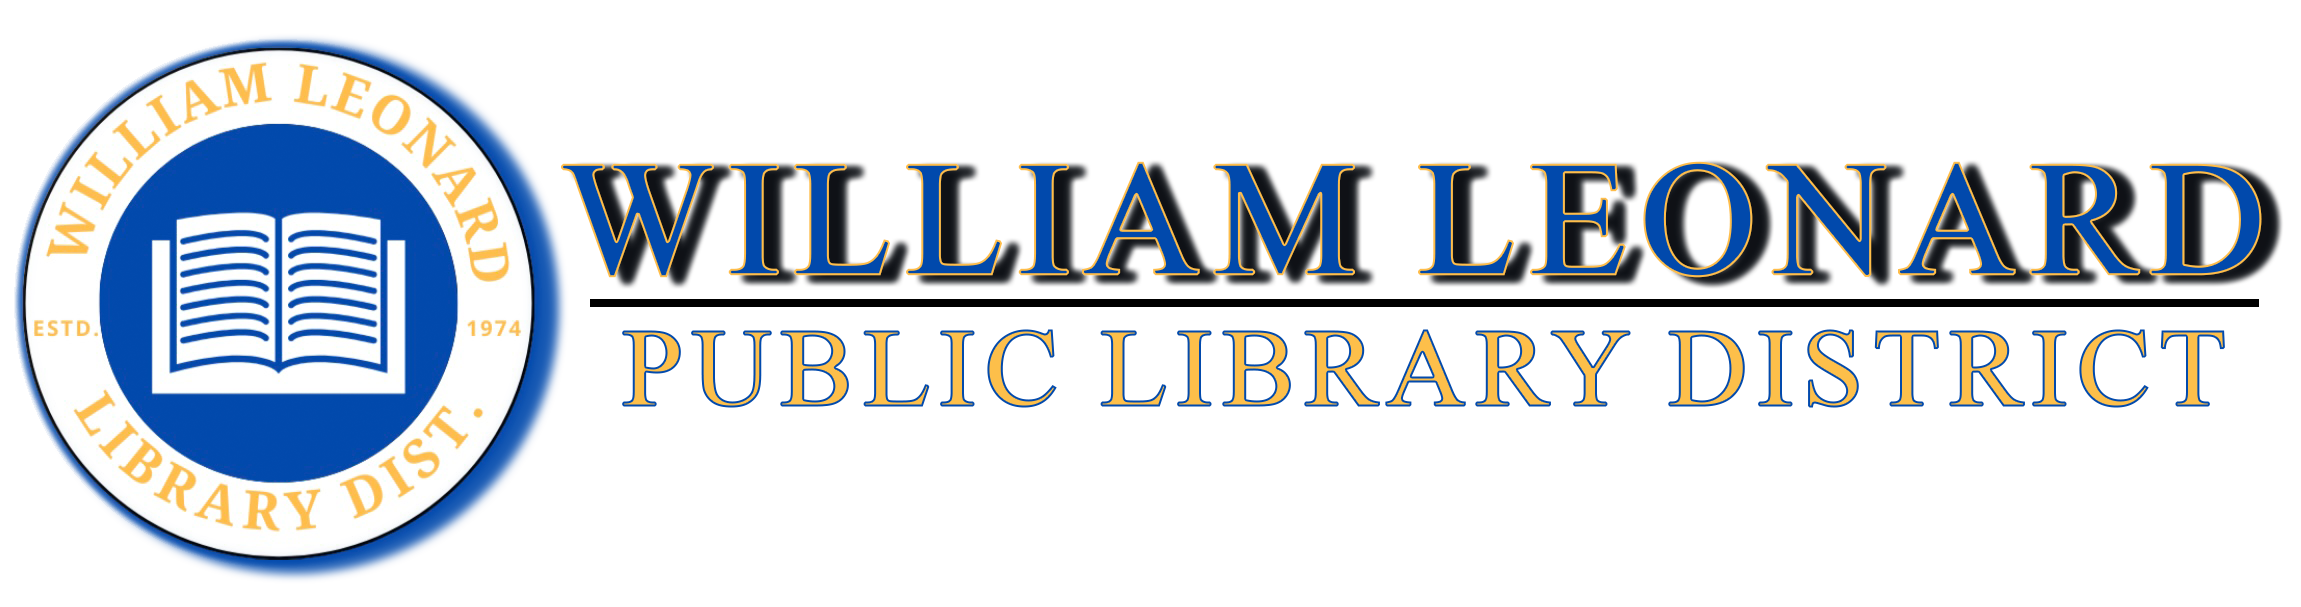 William Leonard Public Library District